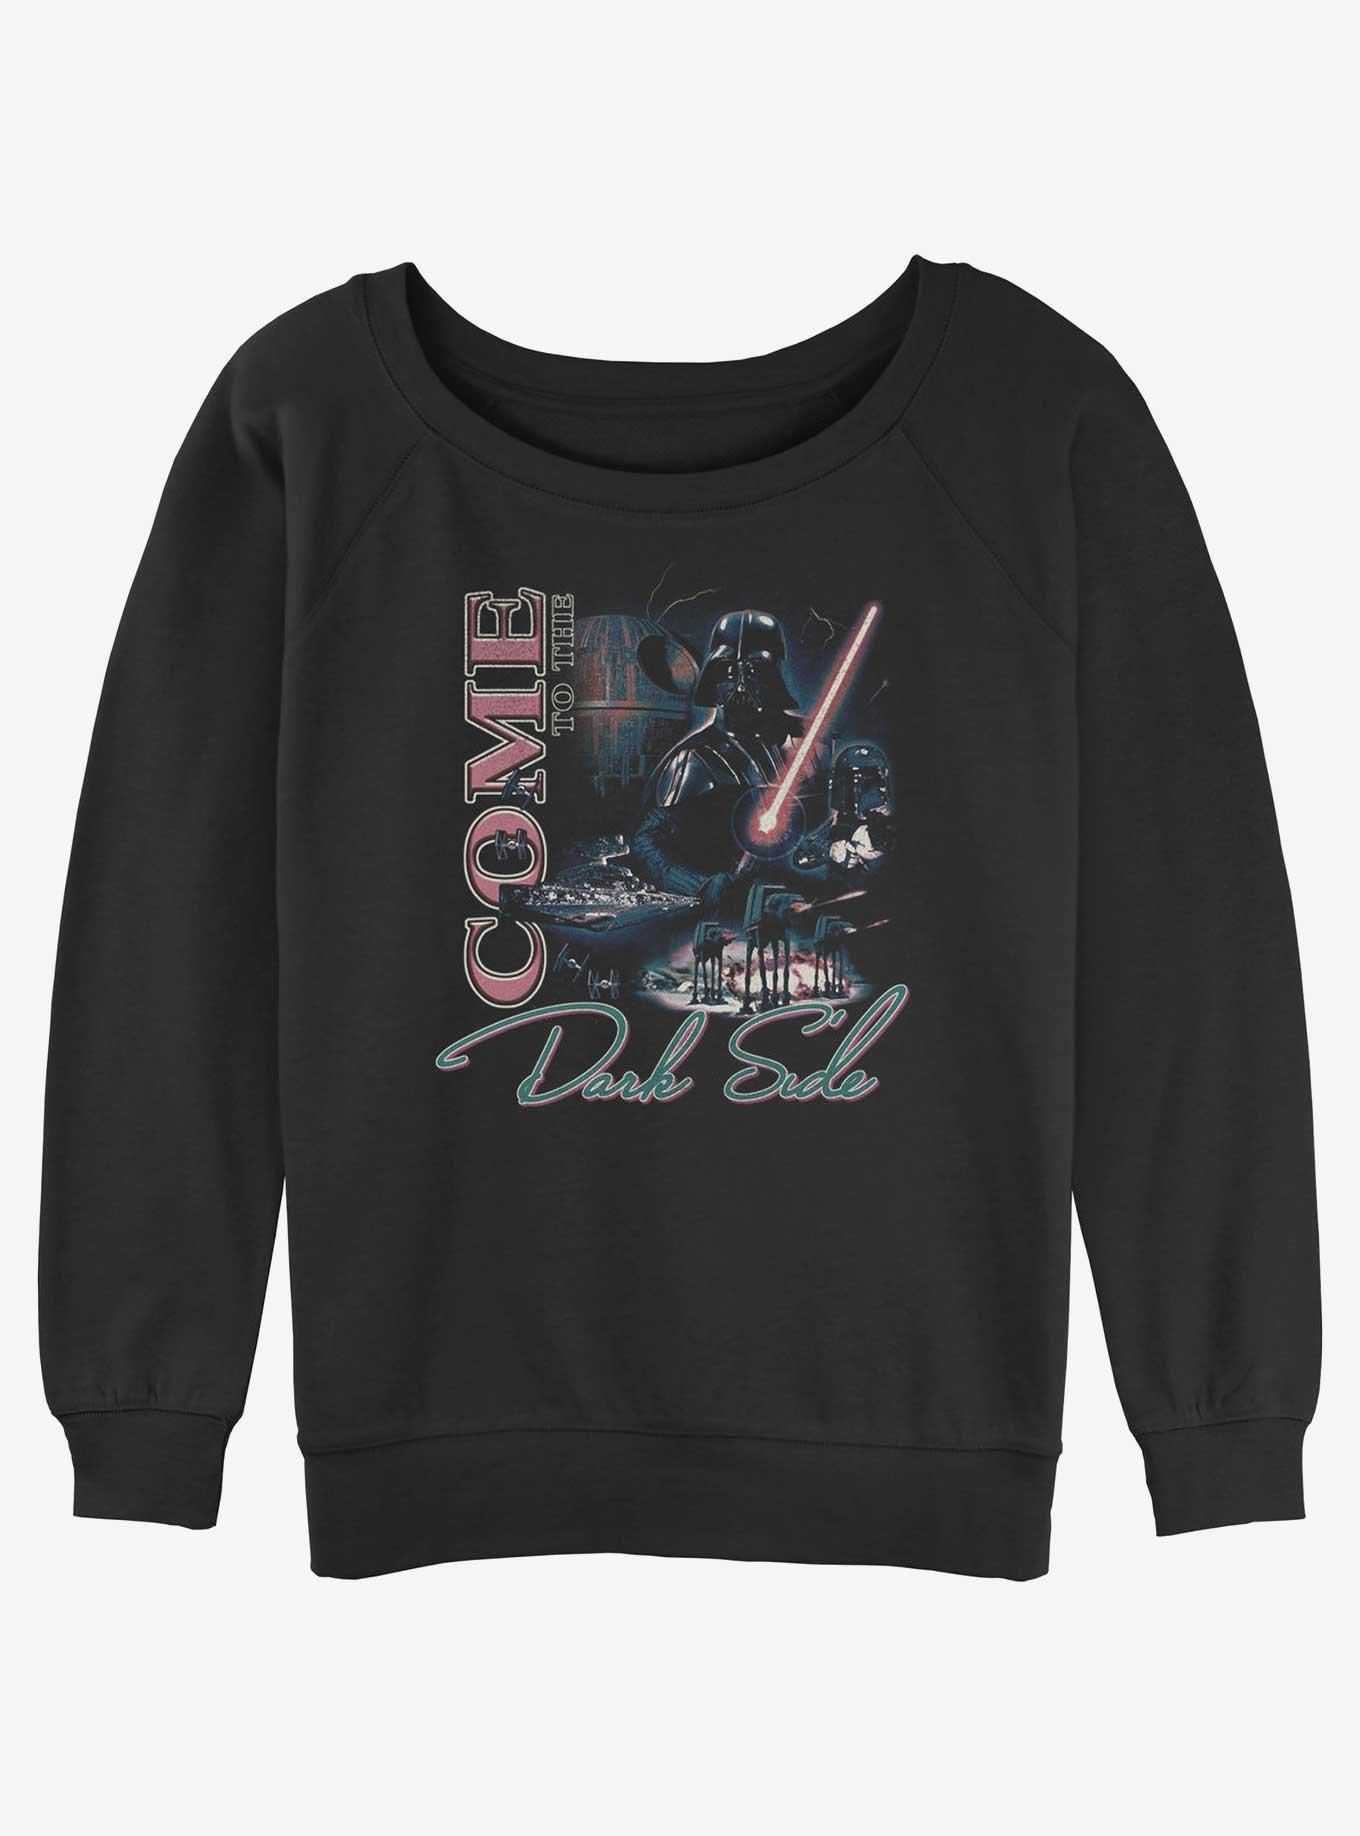 Star Wars Come To The Dark Side Girls Slouchy Sweatshirt, BLACK, hi-res